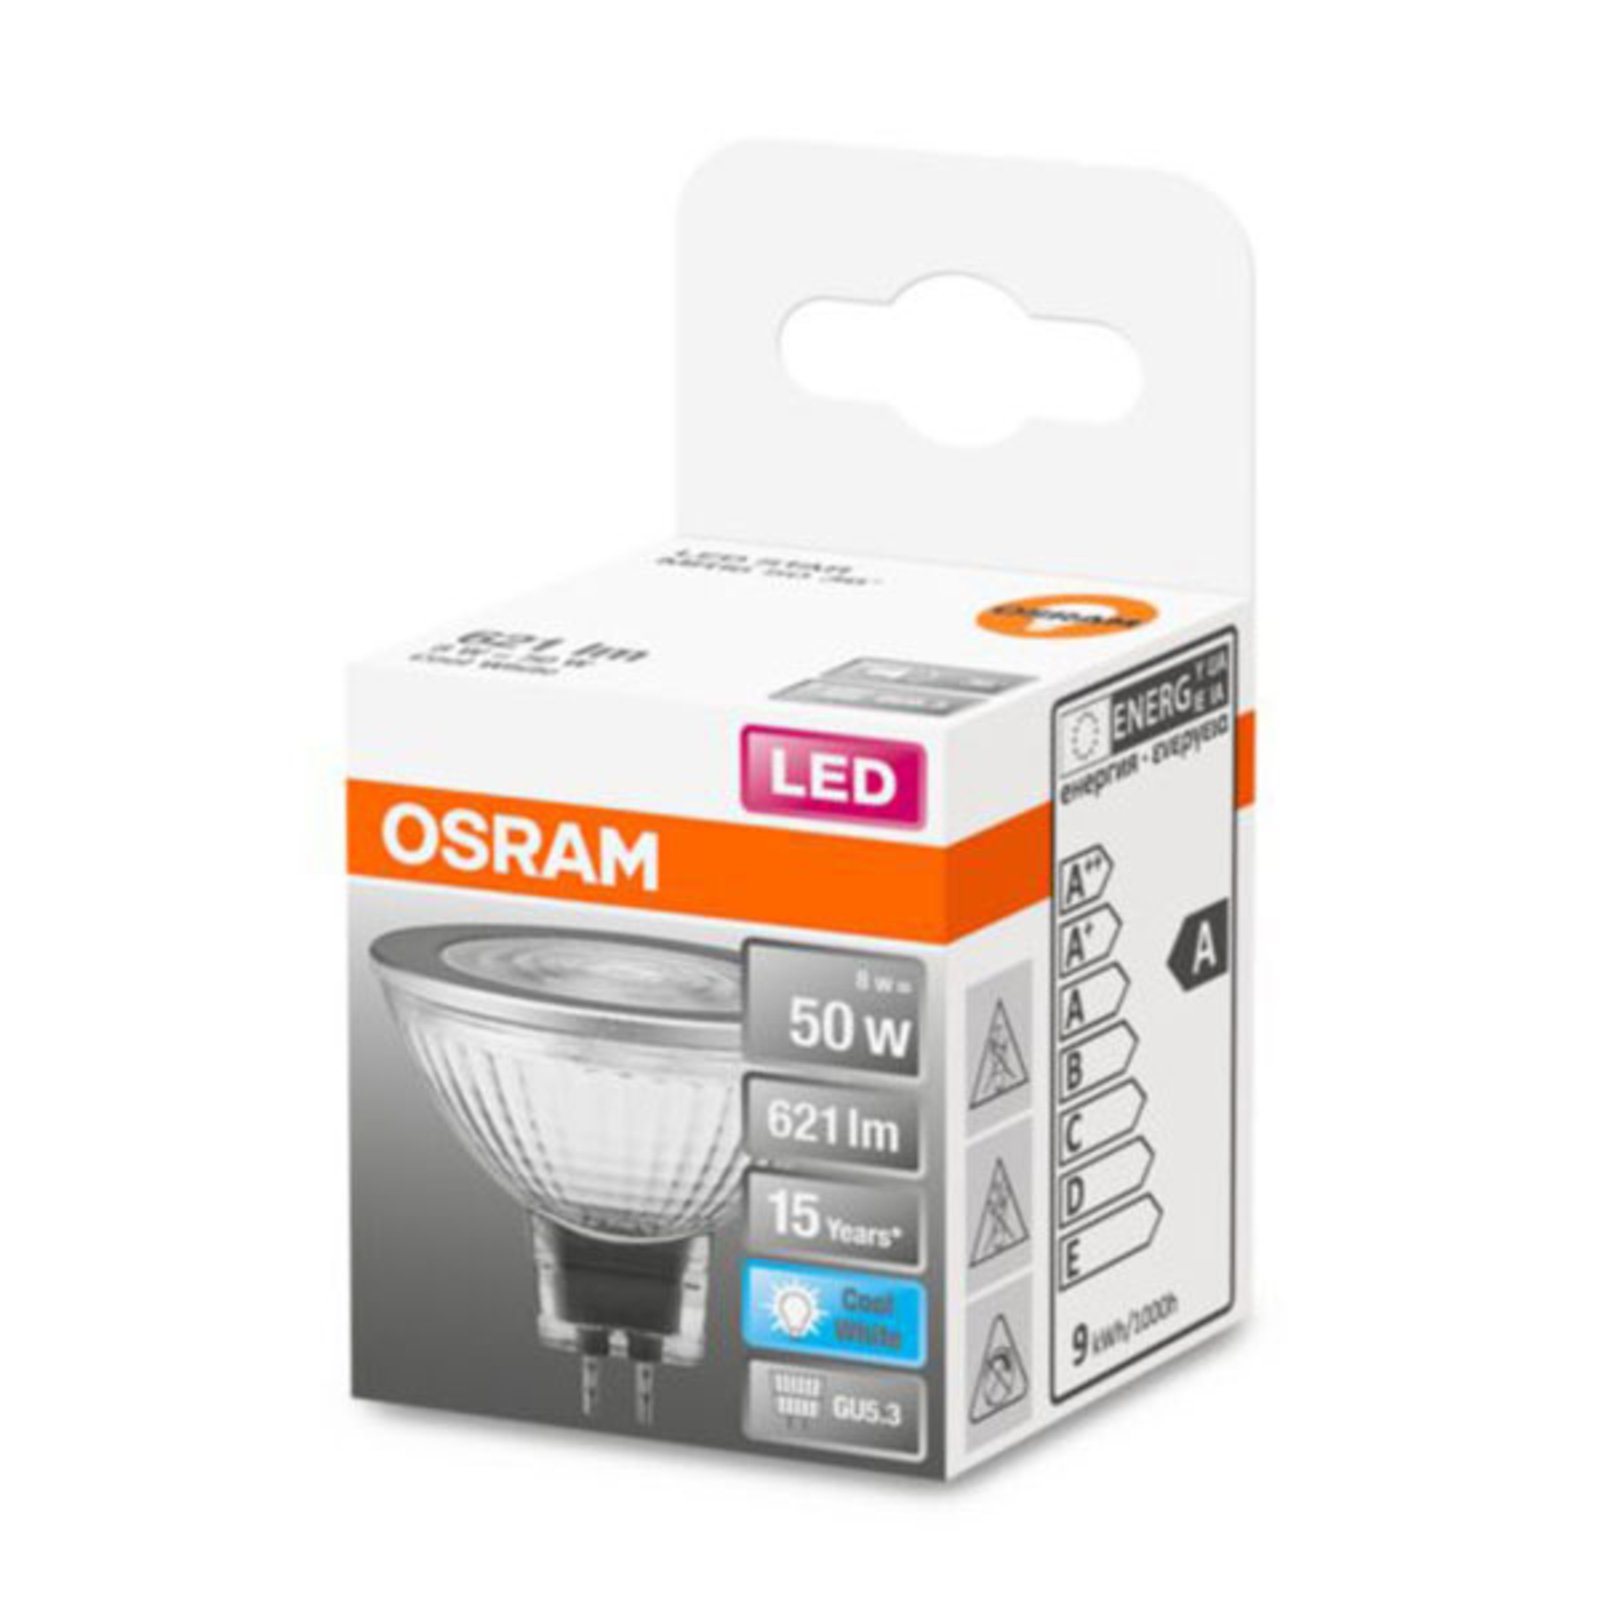 OSRAM LED-reflektor Star 8W universalhvid | Lampegiganten.dk